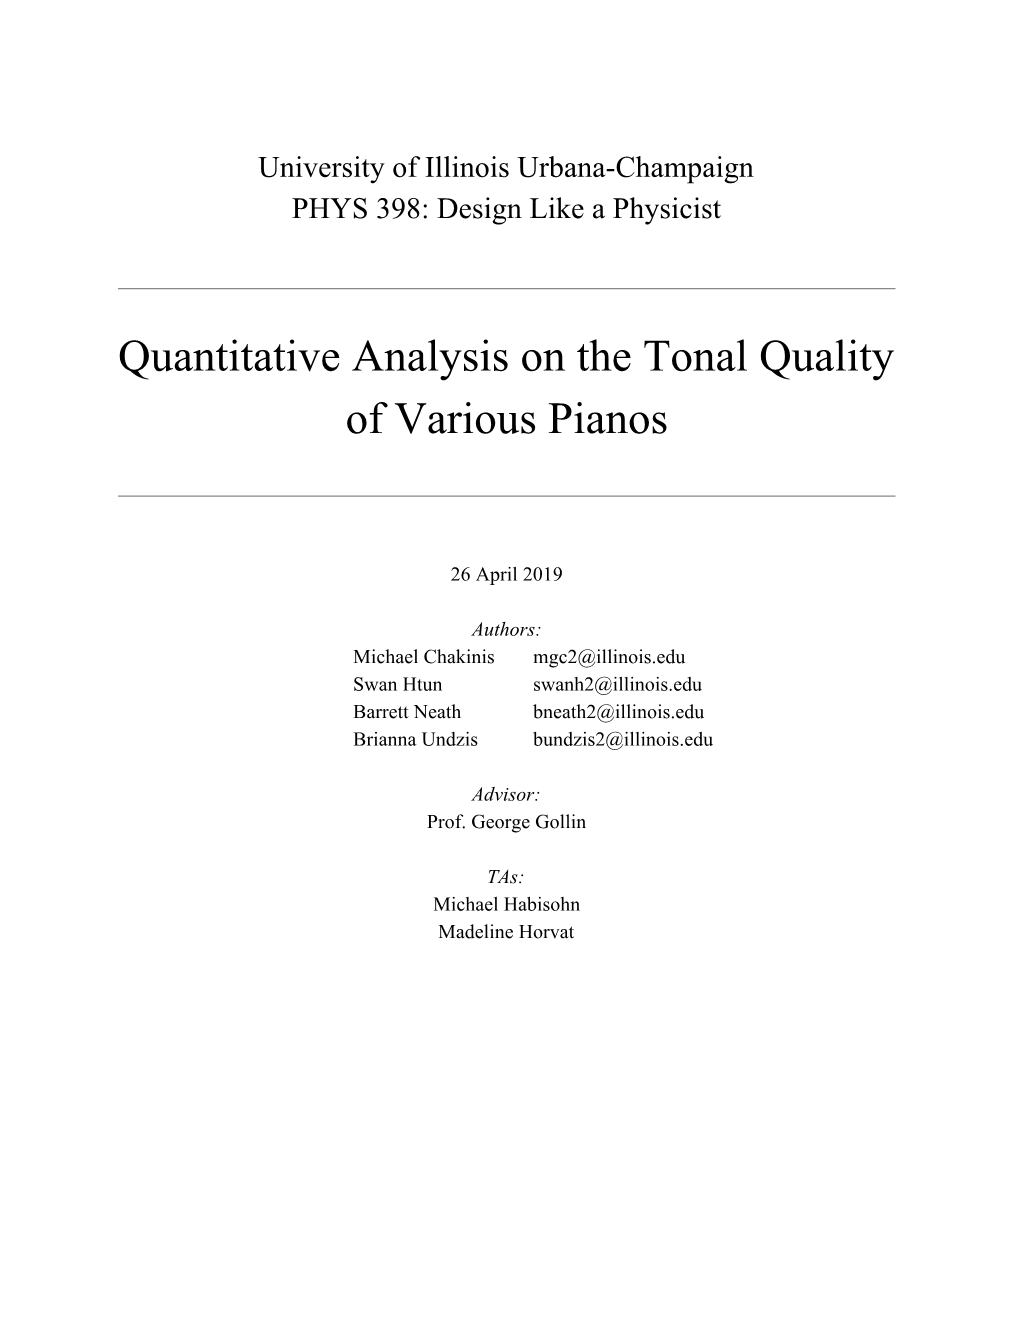 Quantitative Analysis on the Tonal Quality of Various Pianos